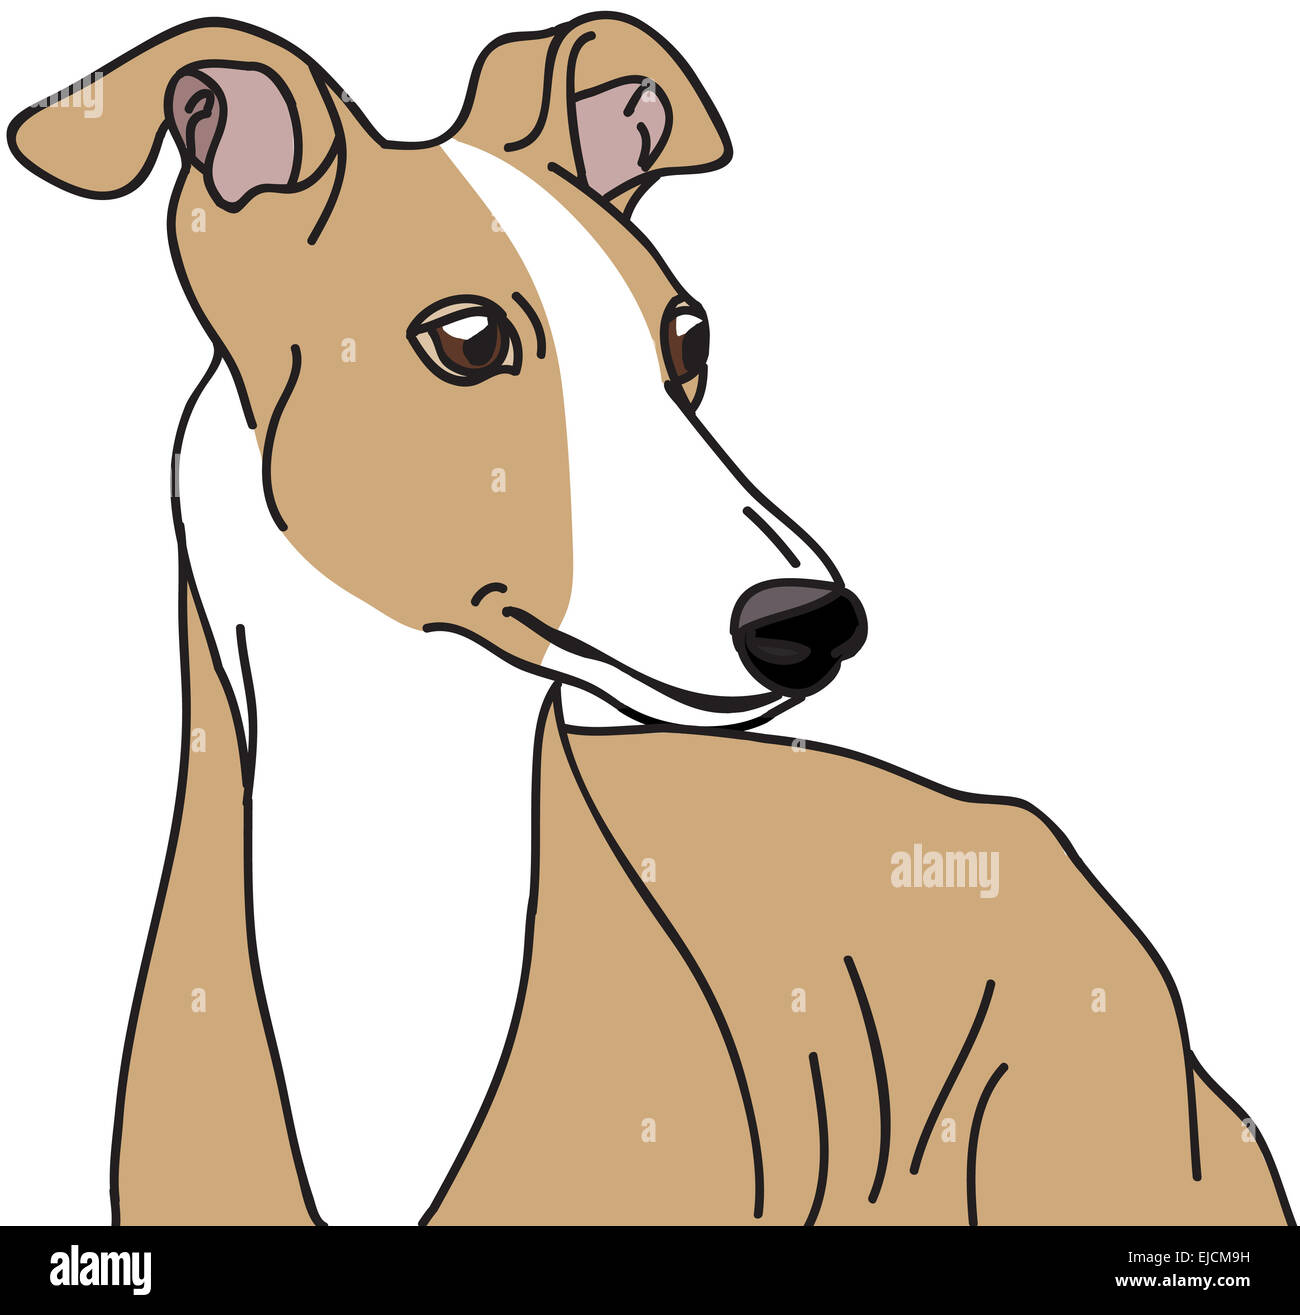 Greyhound dog illustration Stock Photo